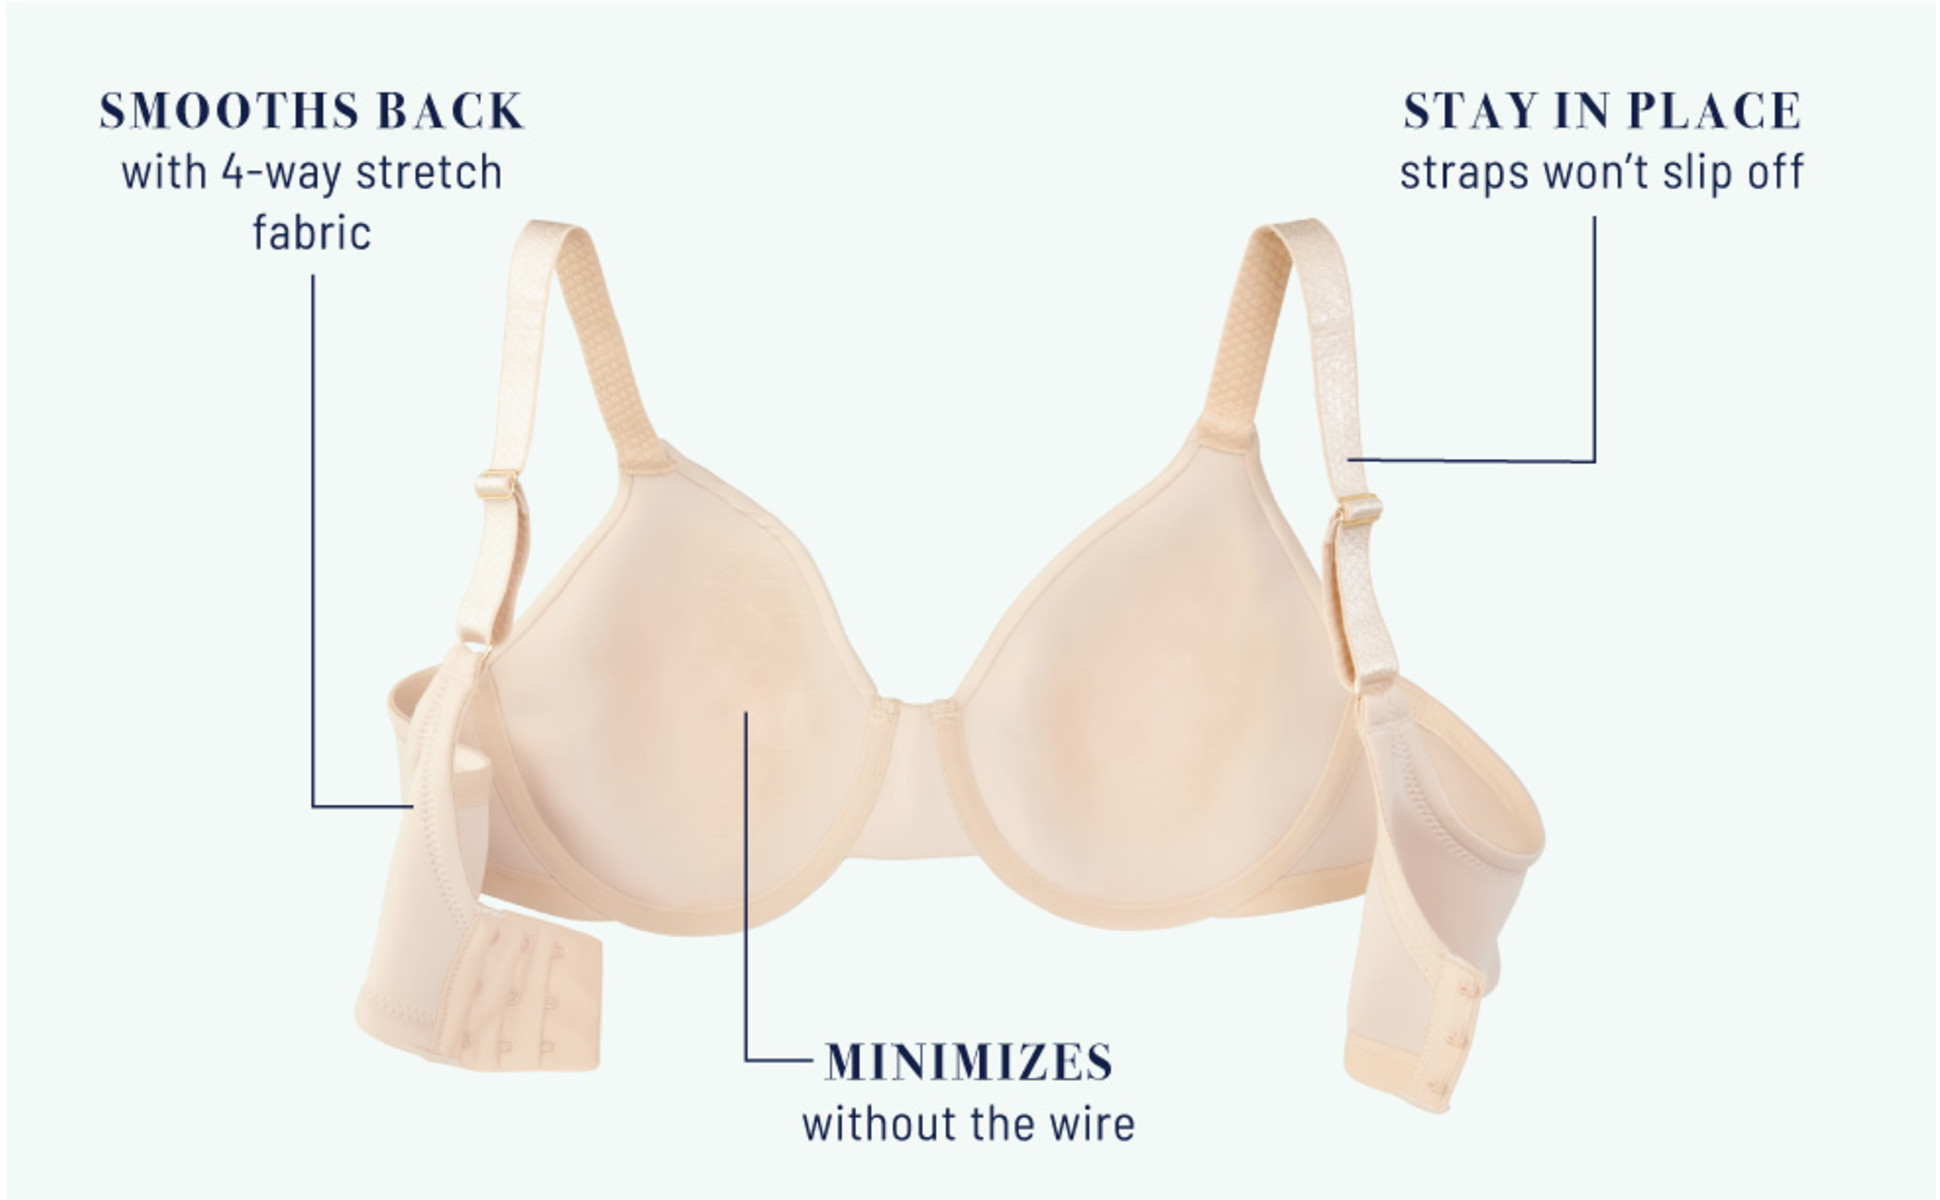 Vanity Fair Women Adjustable Molded minimizer bras 